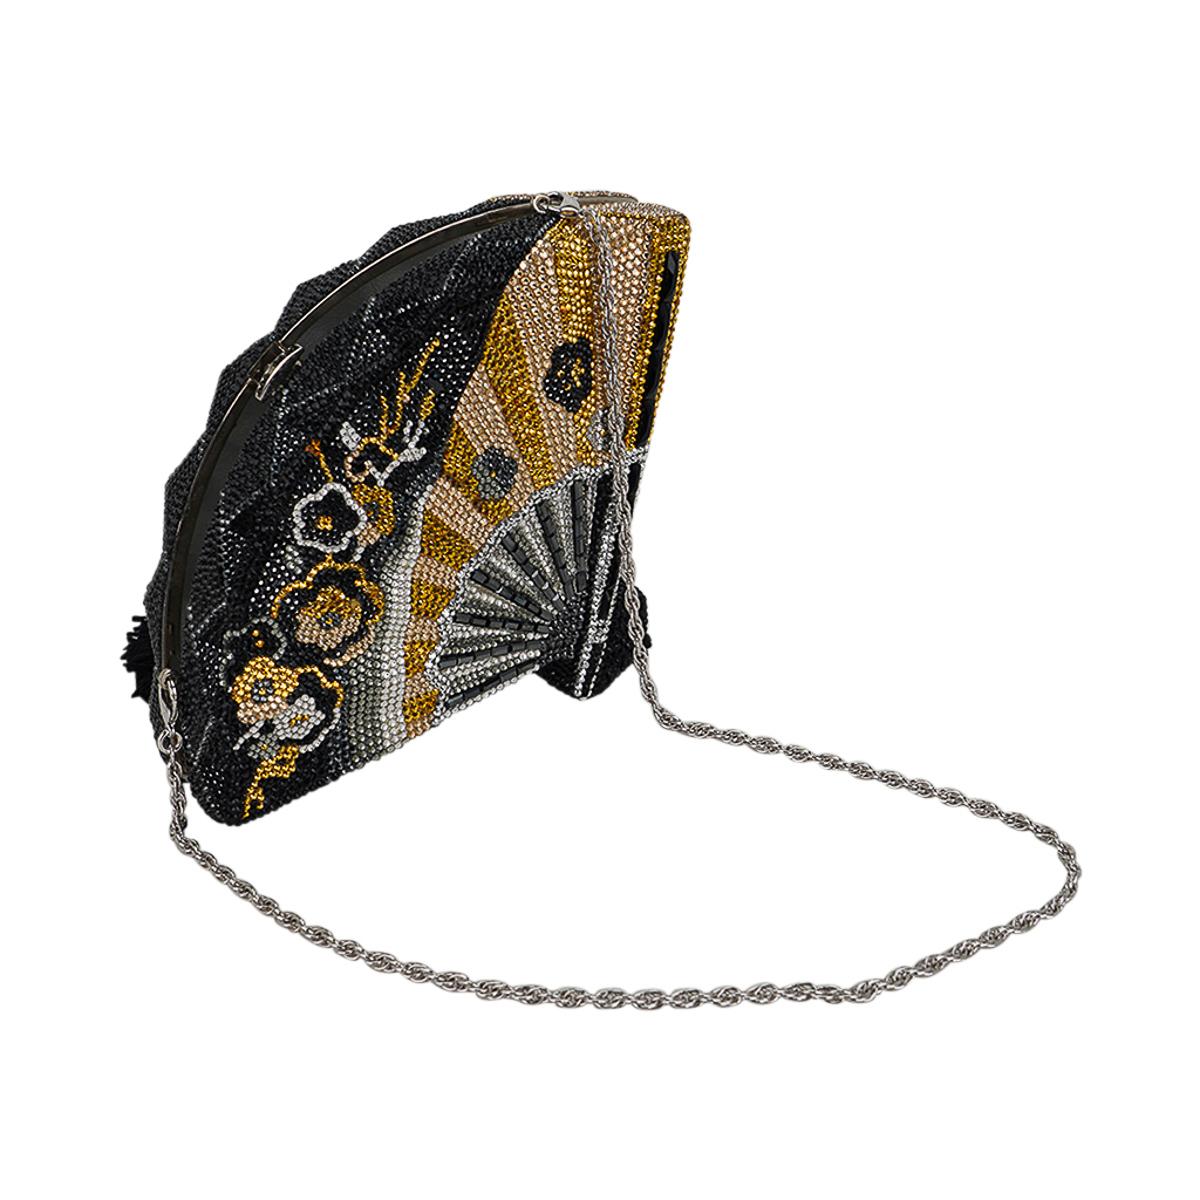 Judith Lieber Fan Swarovski Crystal Minaudiere Clutch Bag Collectors Edition 1